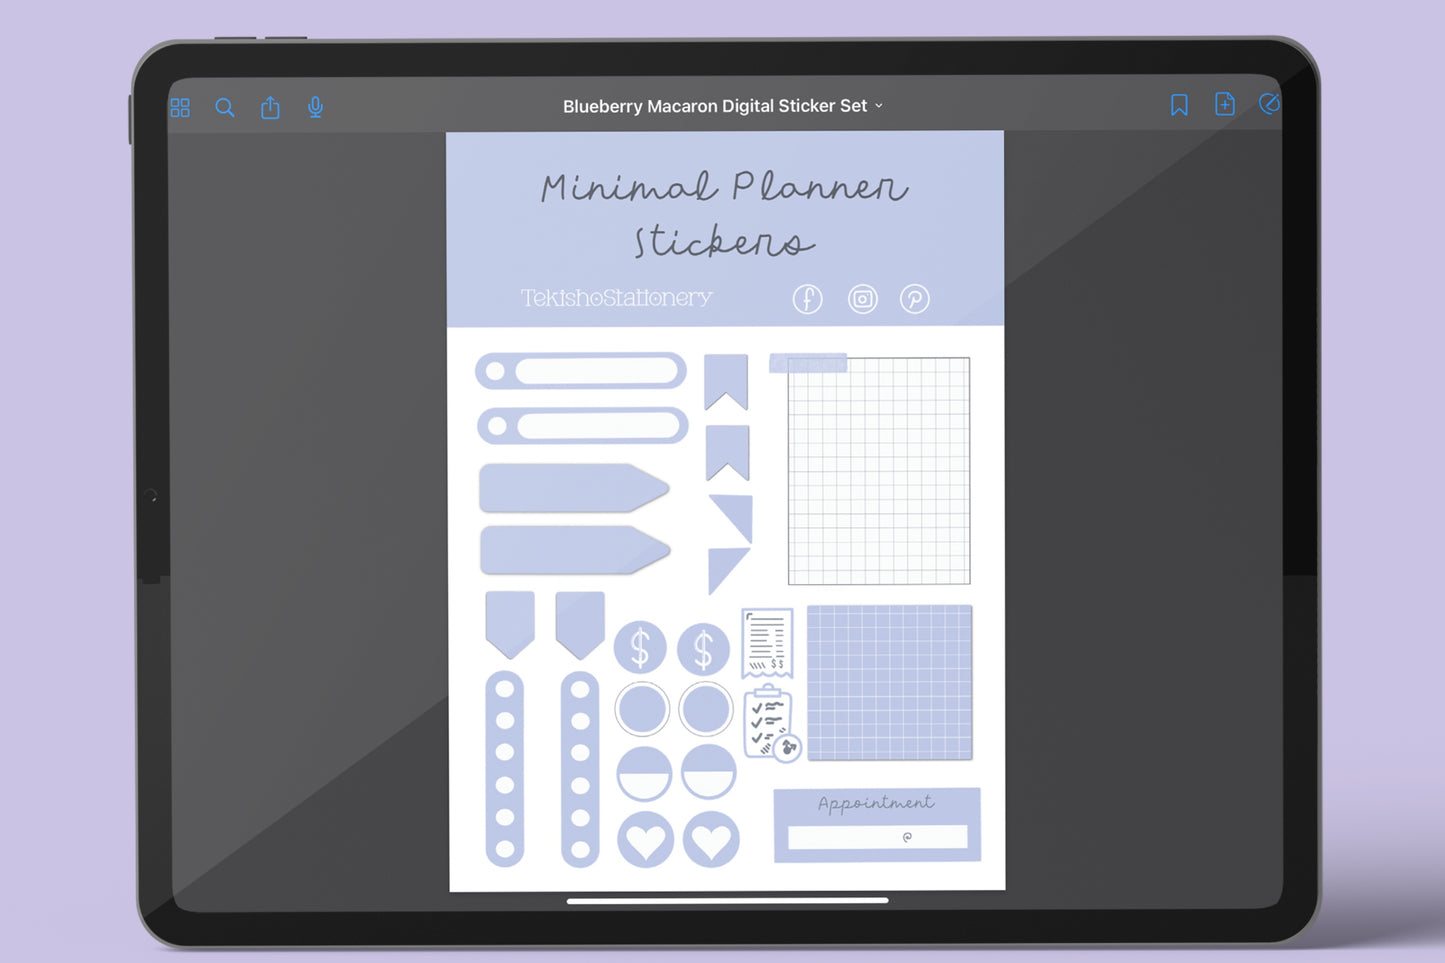 Minimal Digital Planner Precropped Sticker Sets - Blueberry Macaron